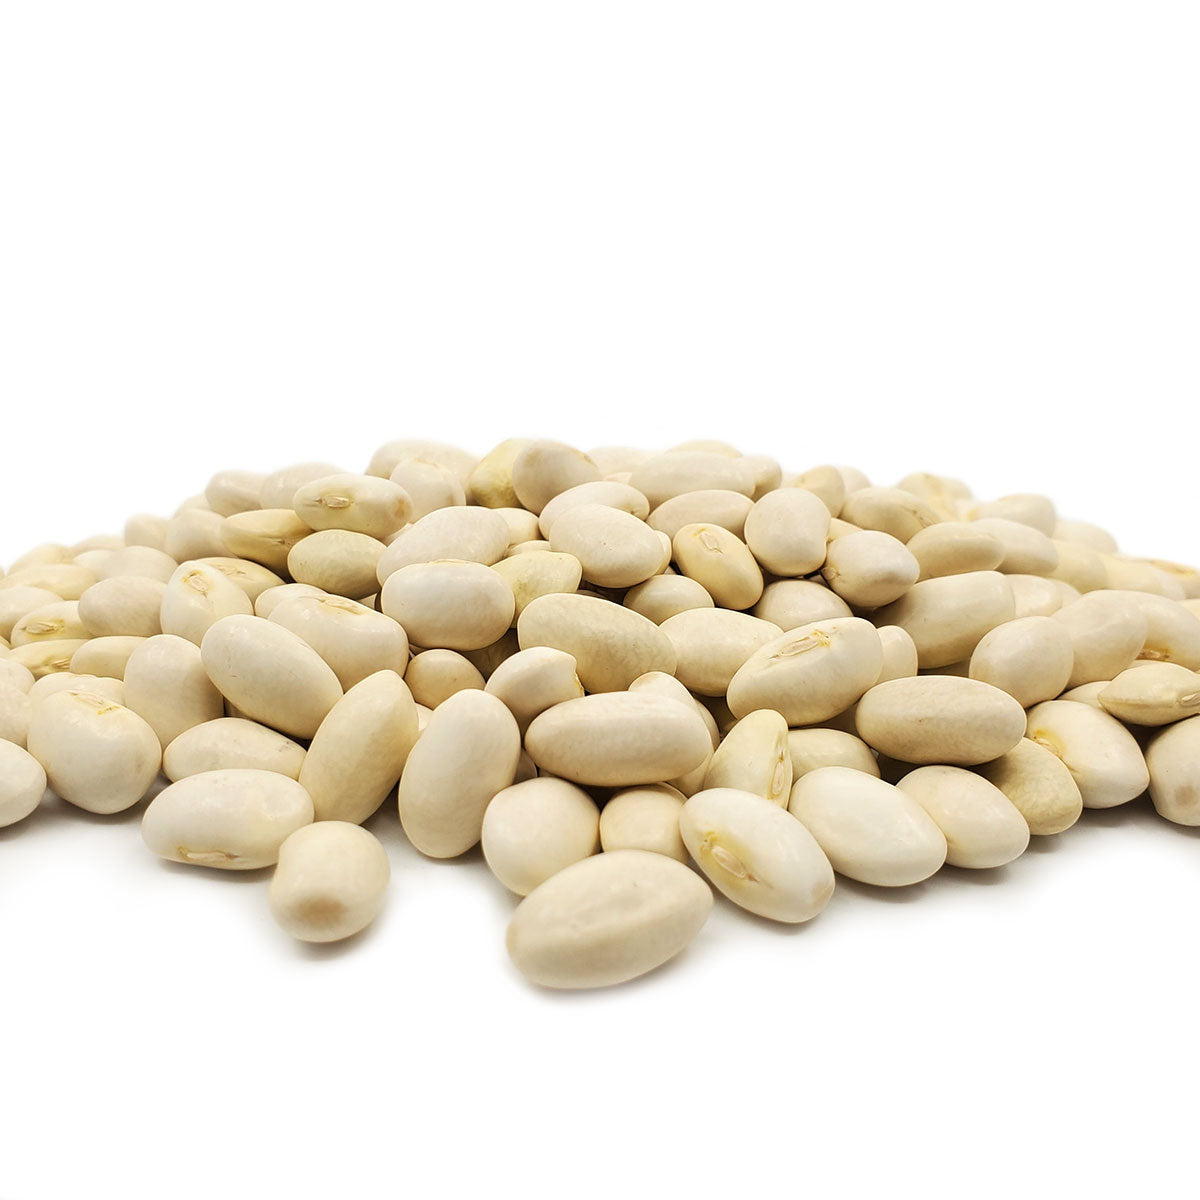 White Bordal/Mortgage Lifter Beans